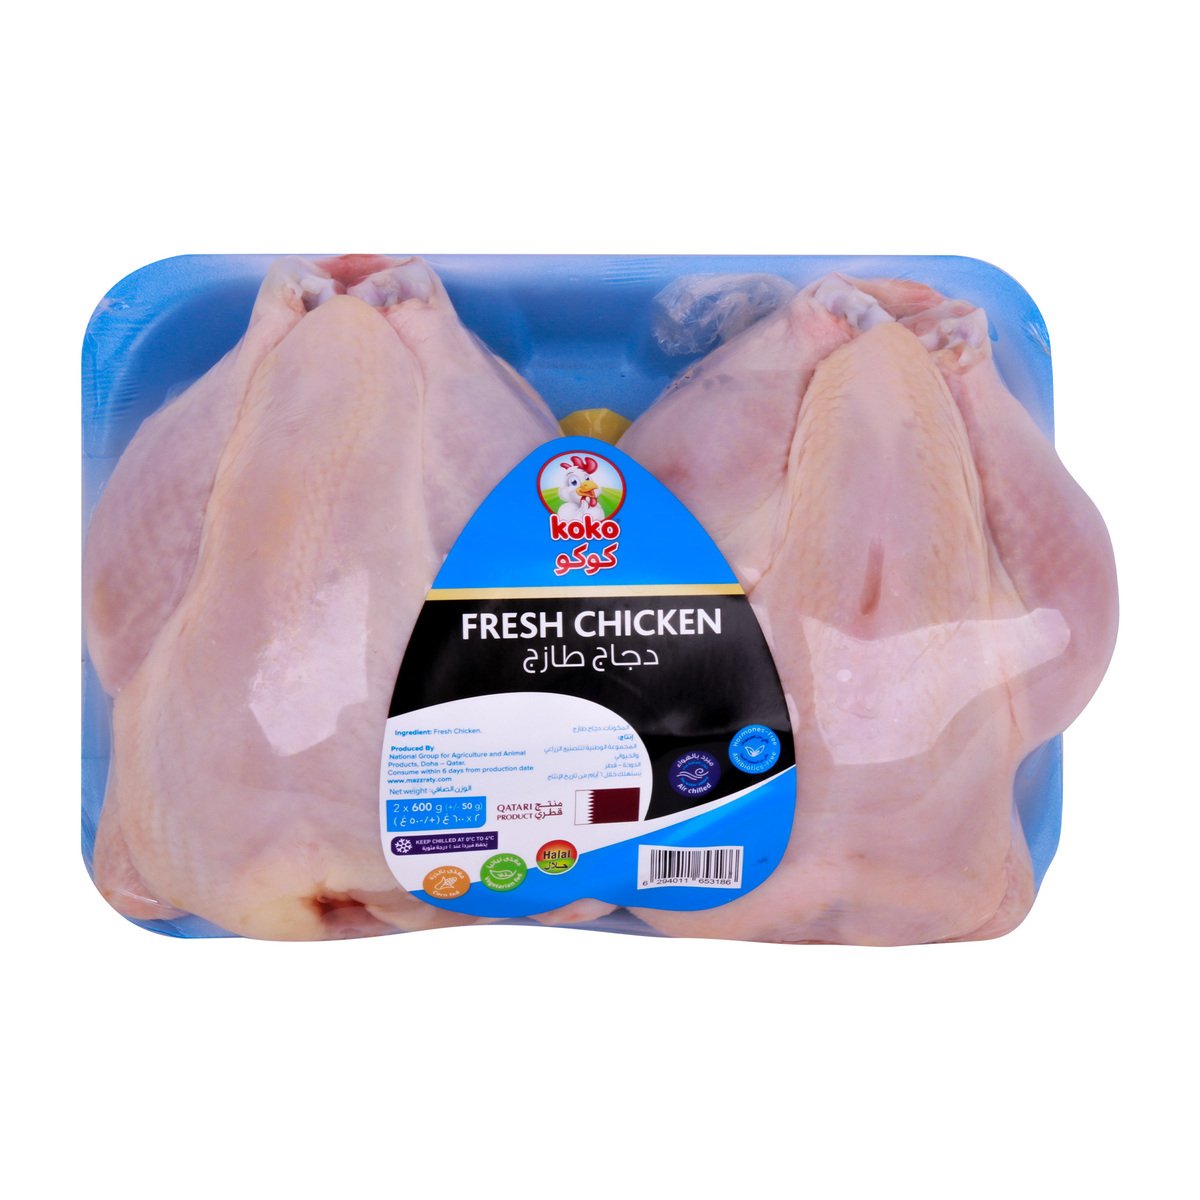 Koko Fresh Whole Chicken 2 x 600 g